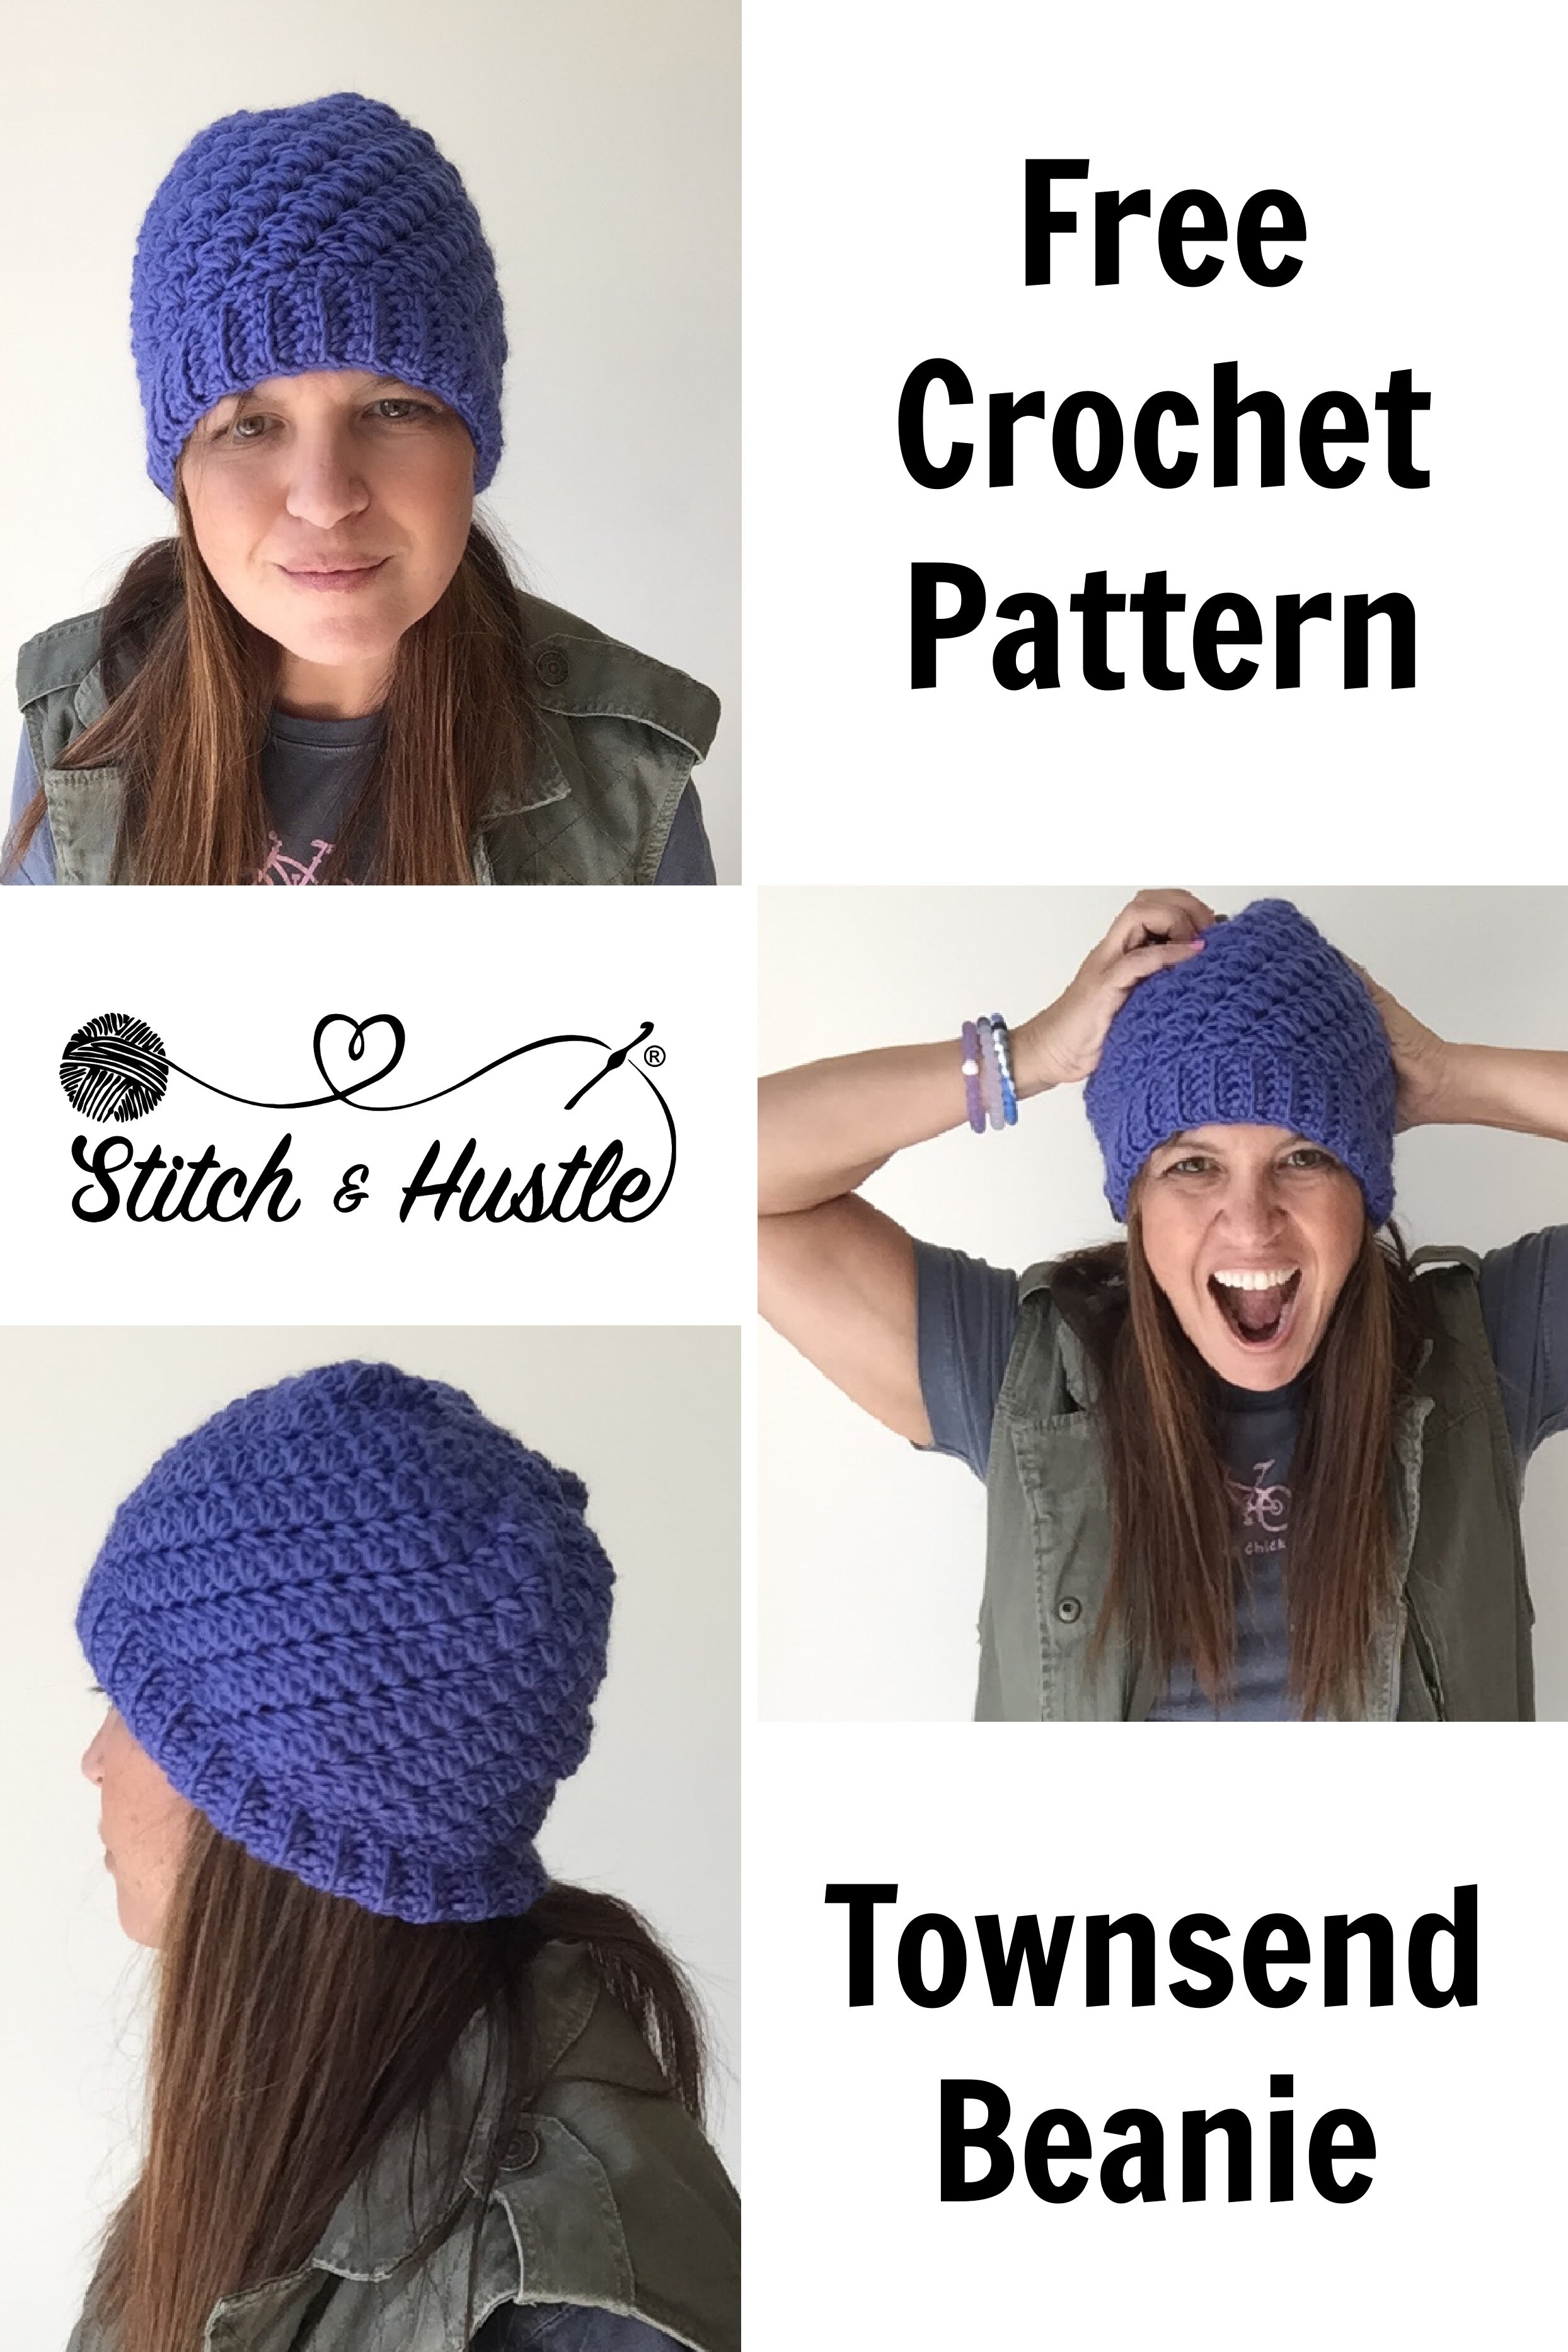 Townsend Beanie Free Crochet Pattern — Stitch & Hustle